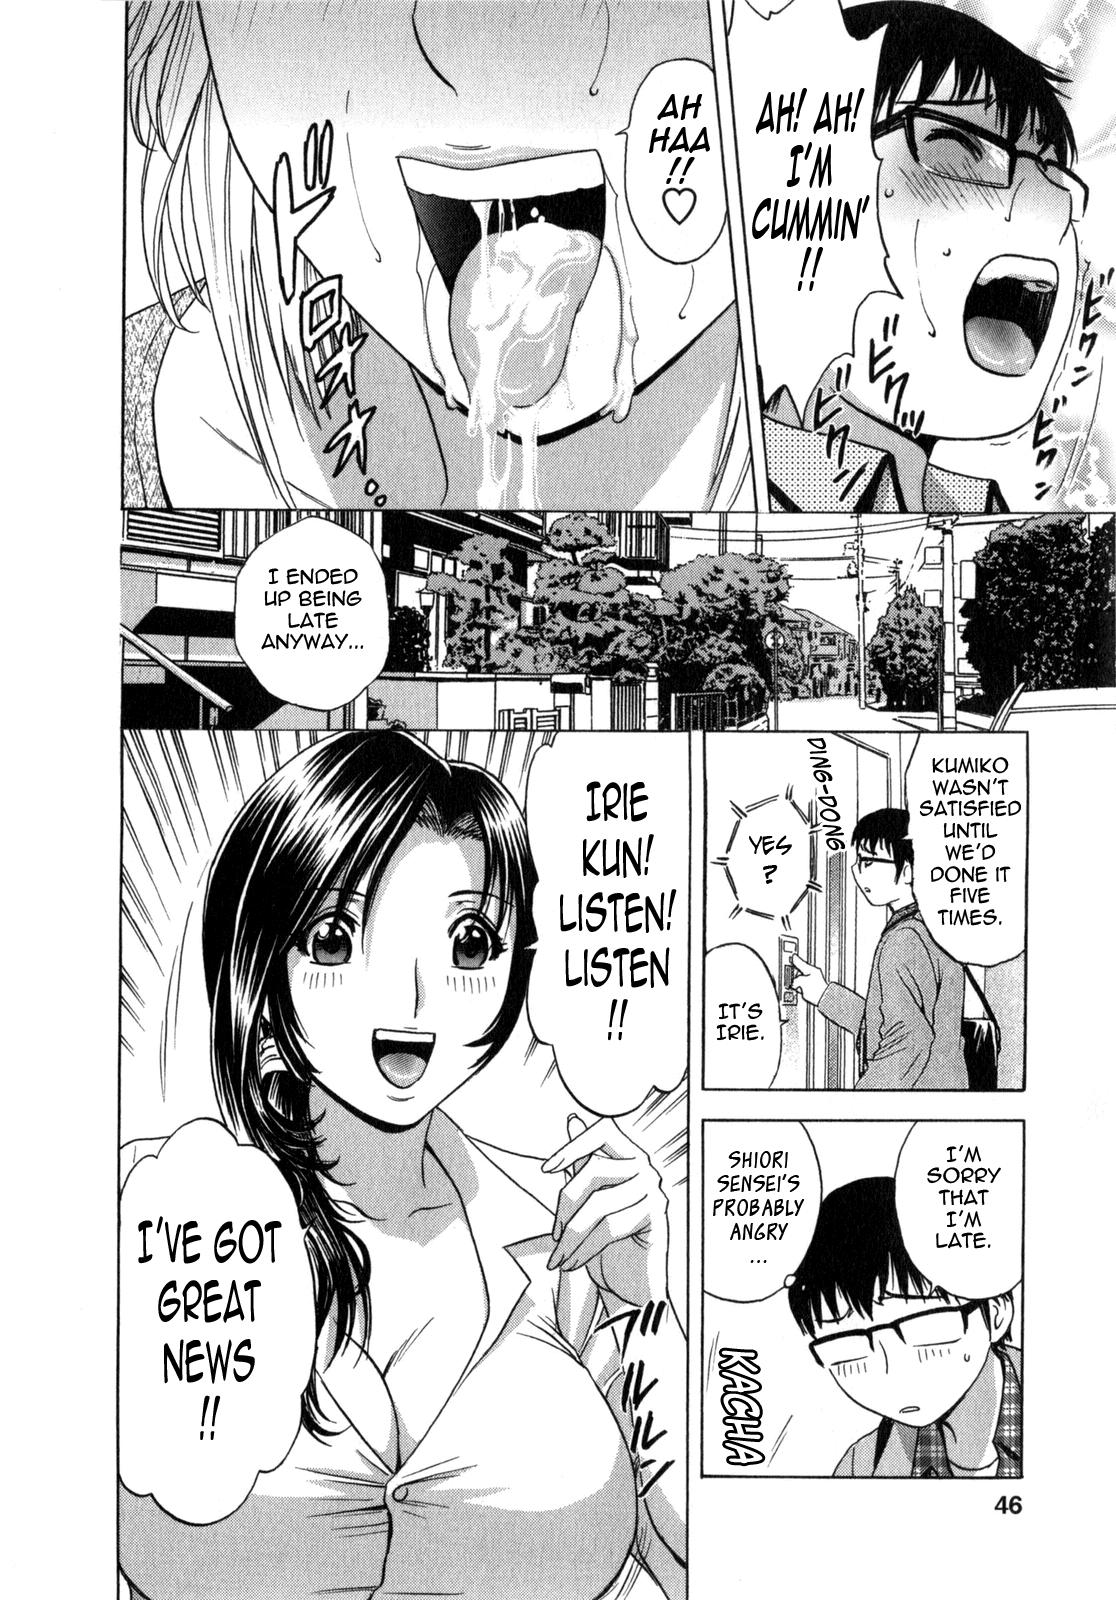 Life with Married Women Just Like a Manga 1 46